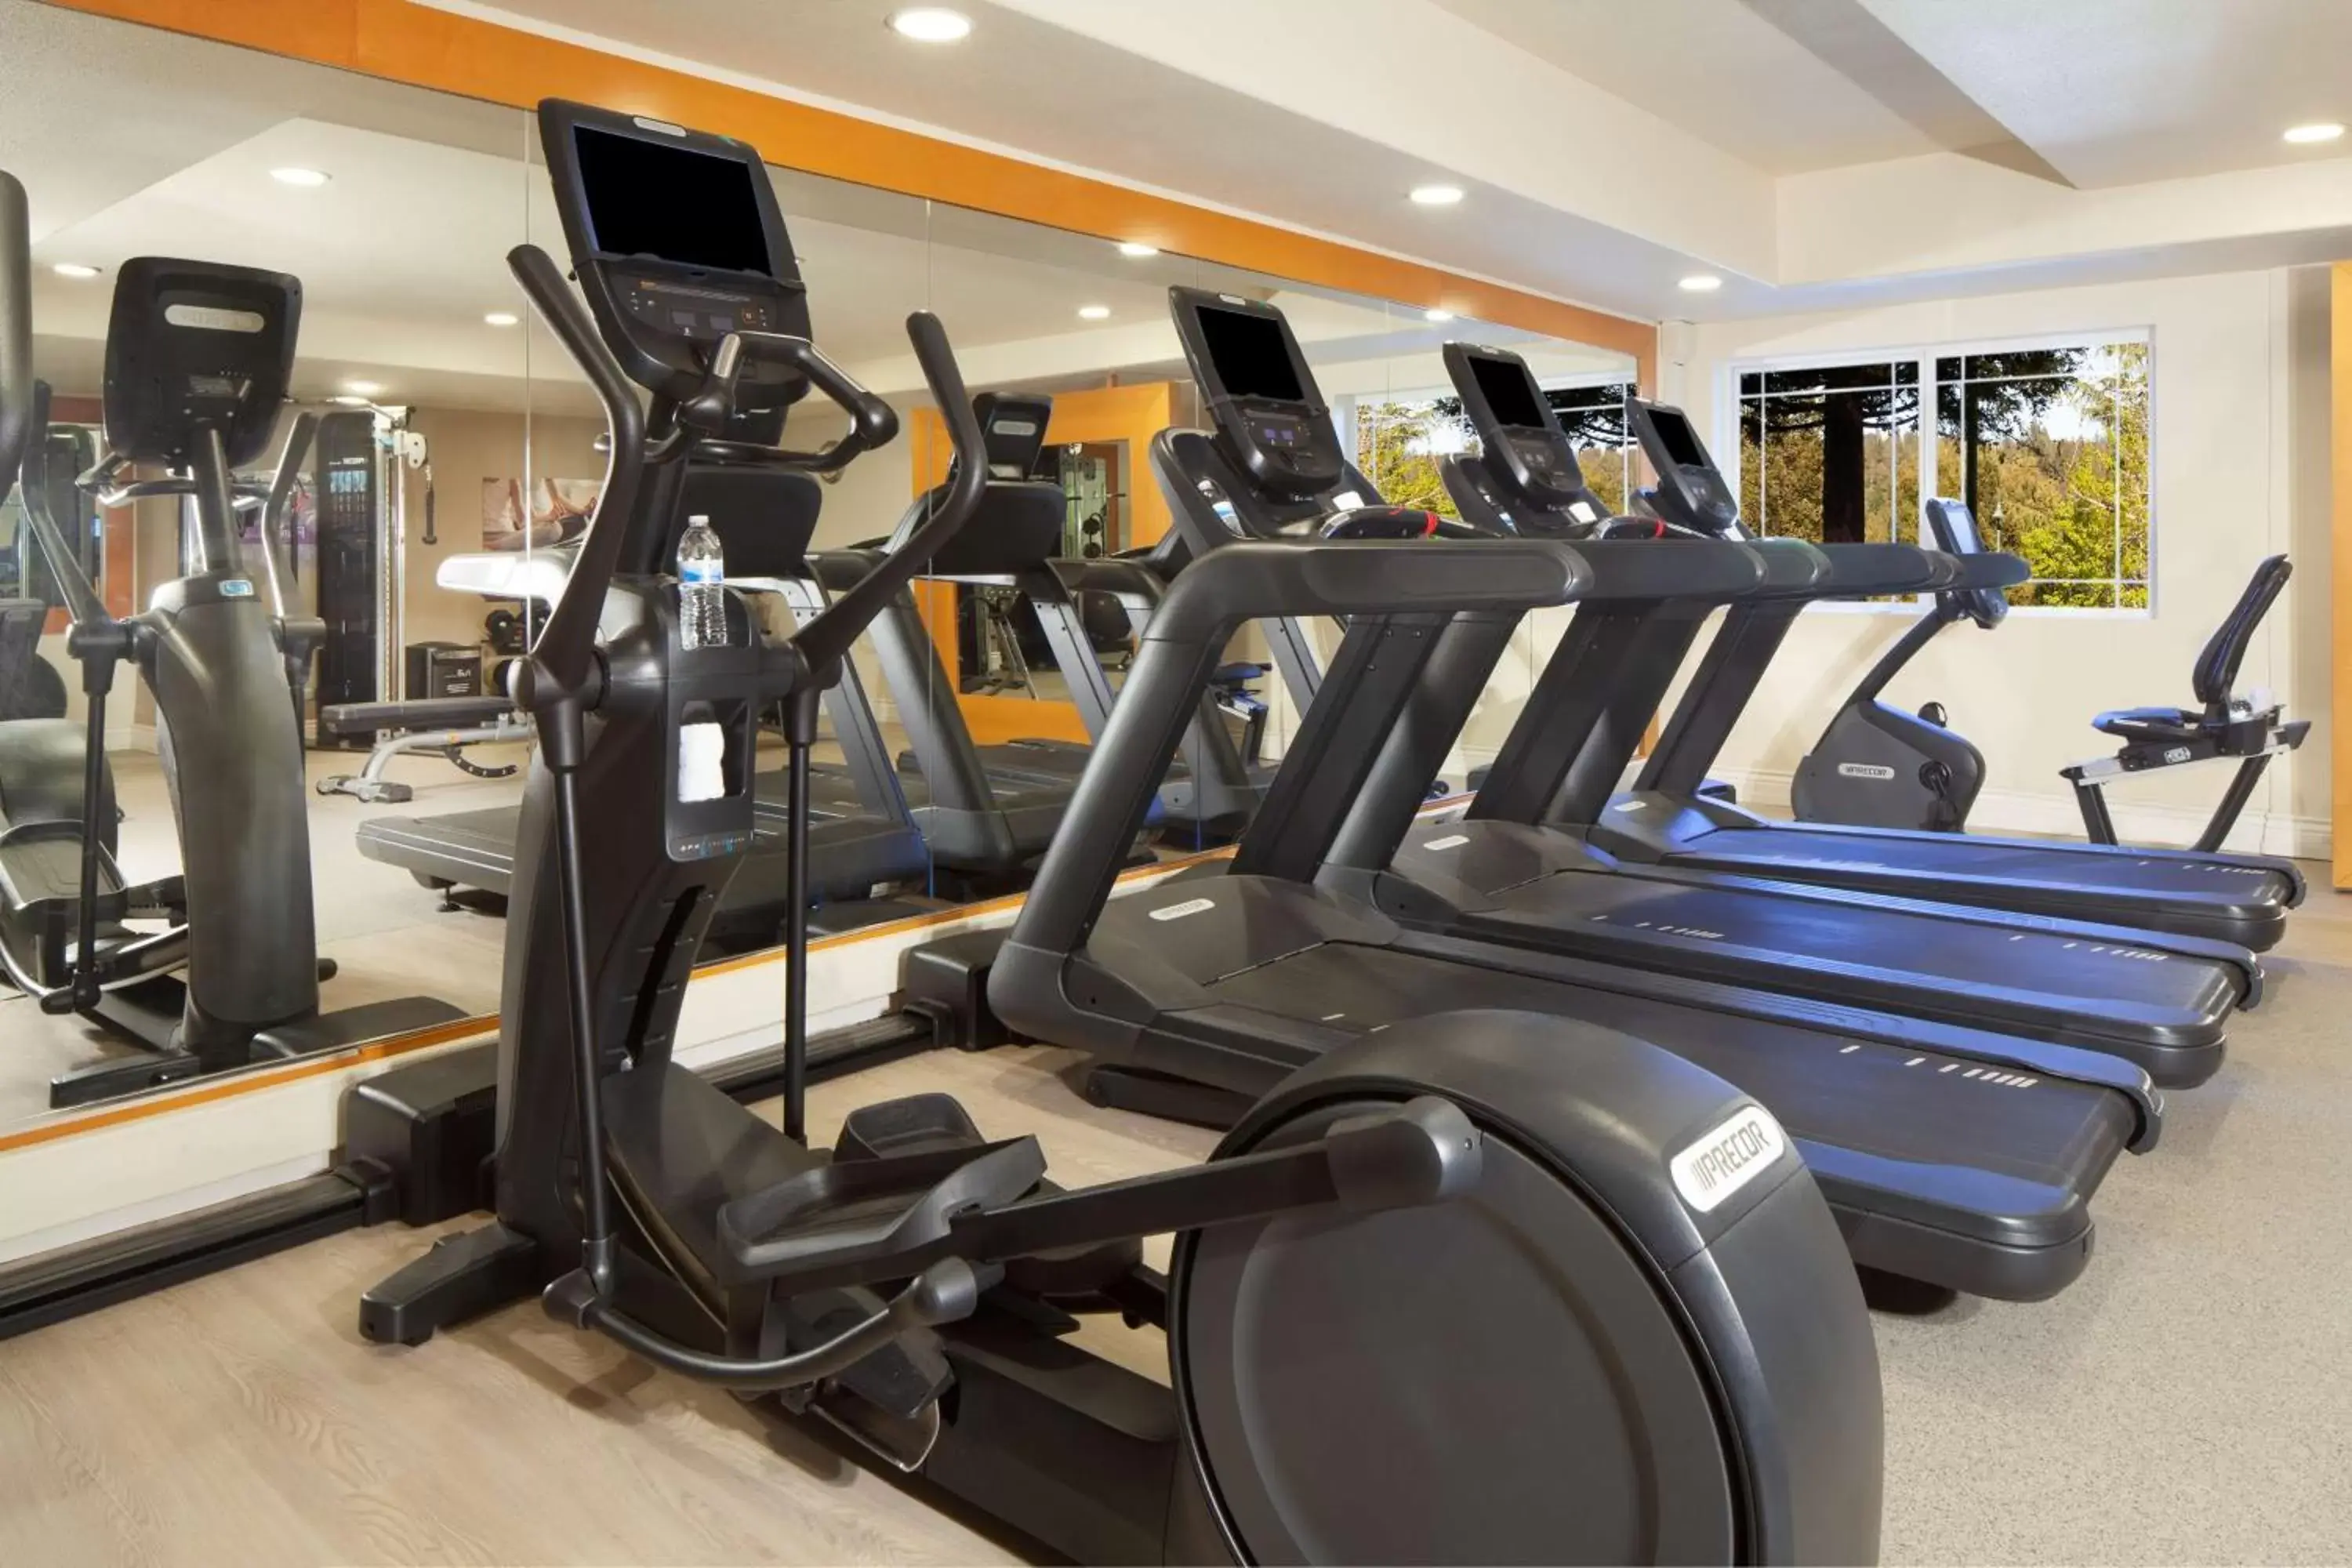 Fitness centre/facilities, Fitness Center/Facilities in Hilton Santa Cruz Scotts Valley